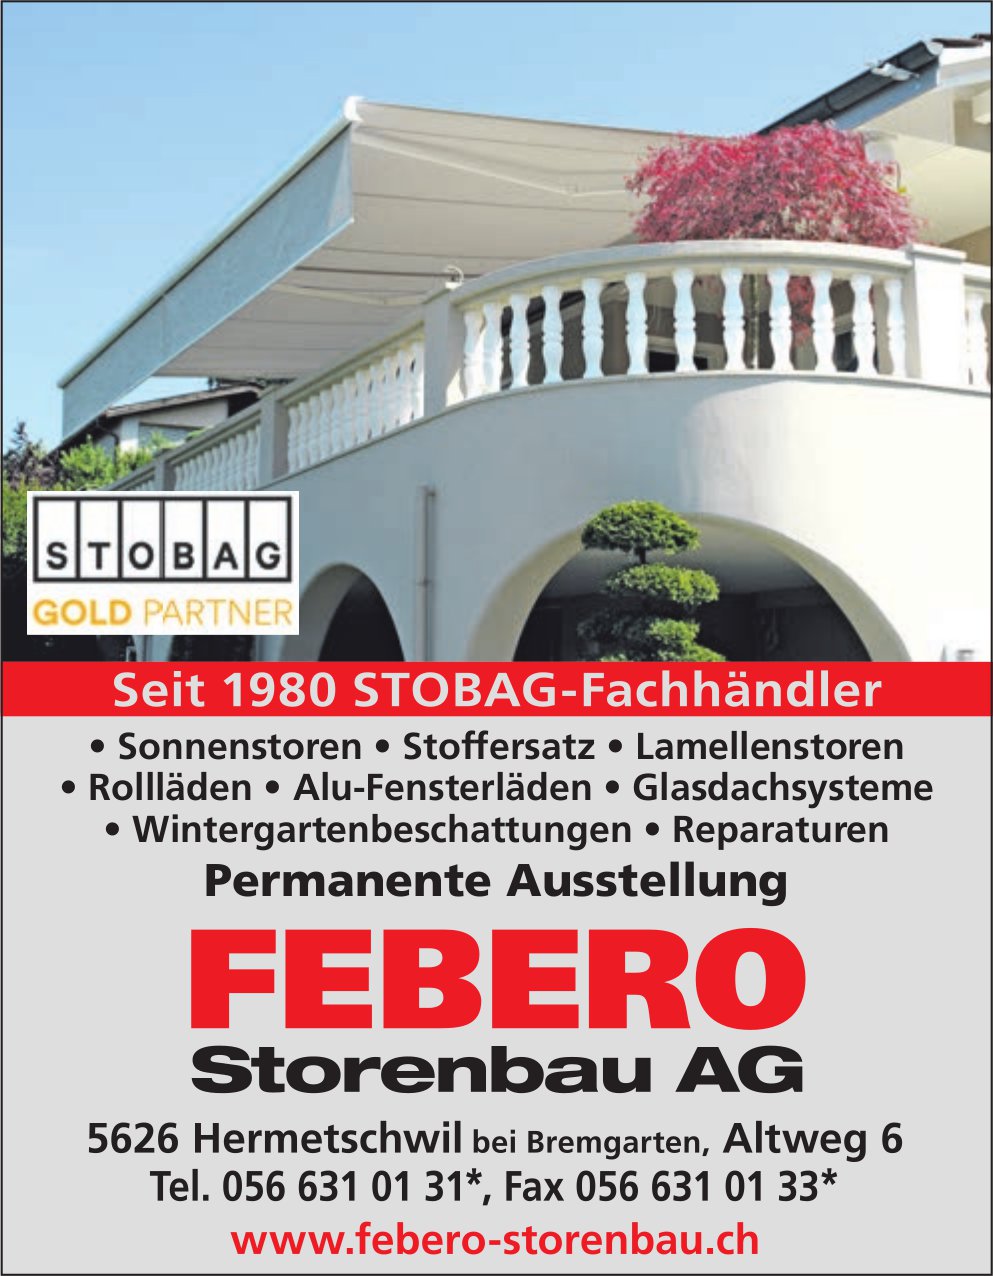 Febero Storenbau AG, Hermetschwil - Permanente Ausstellung